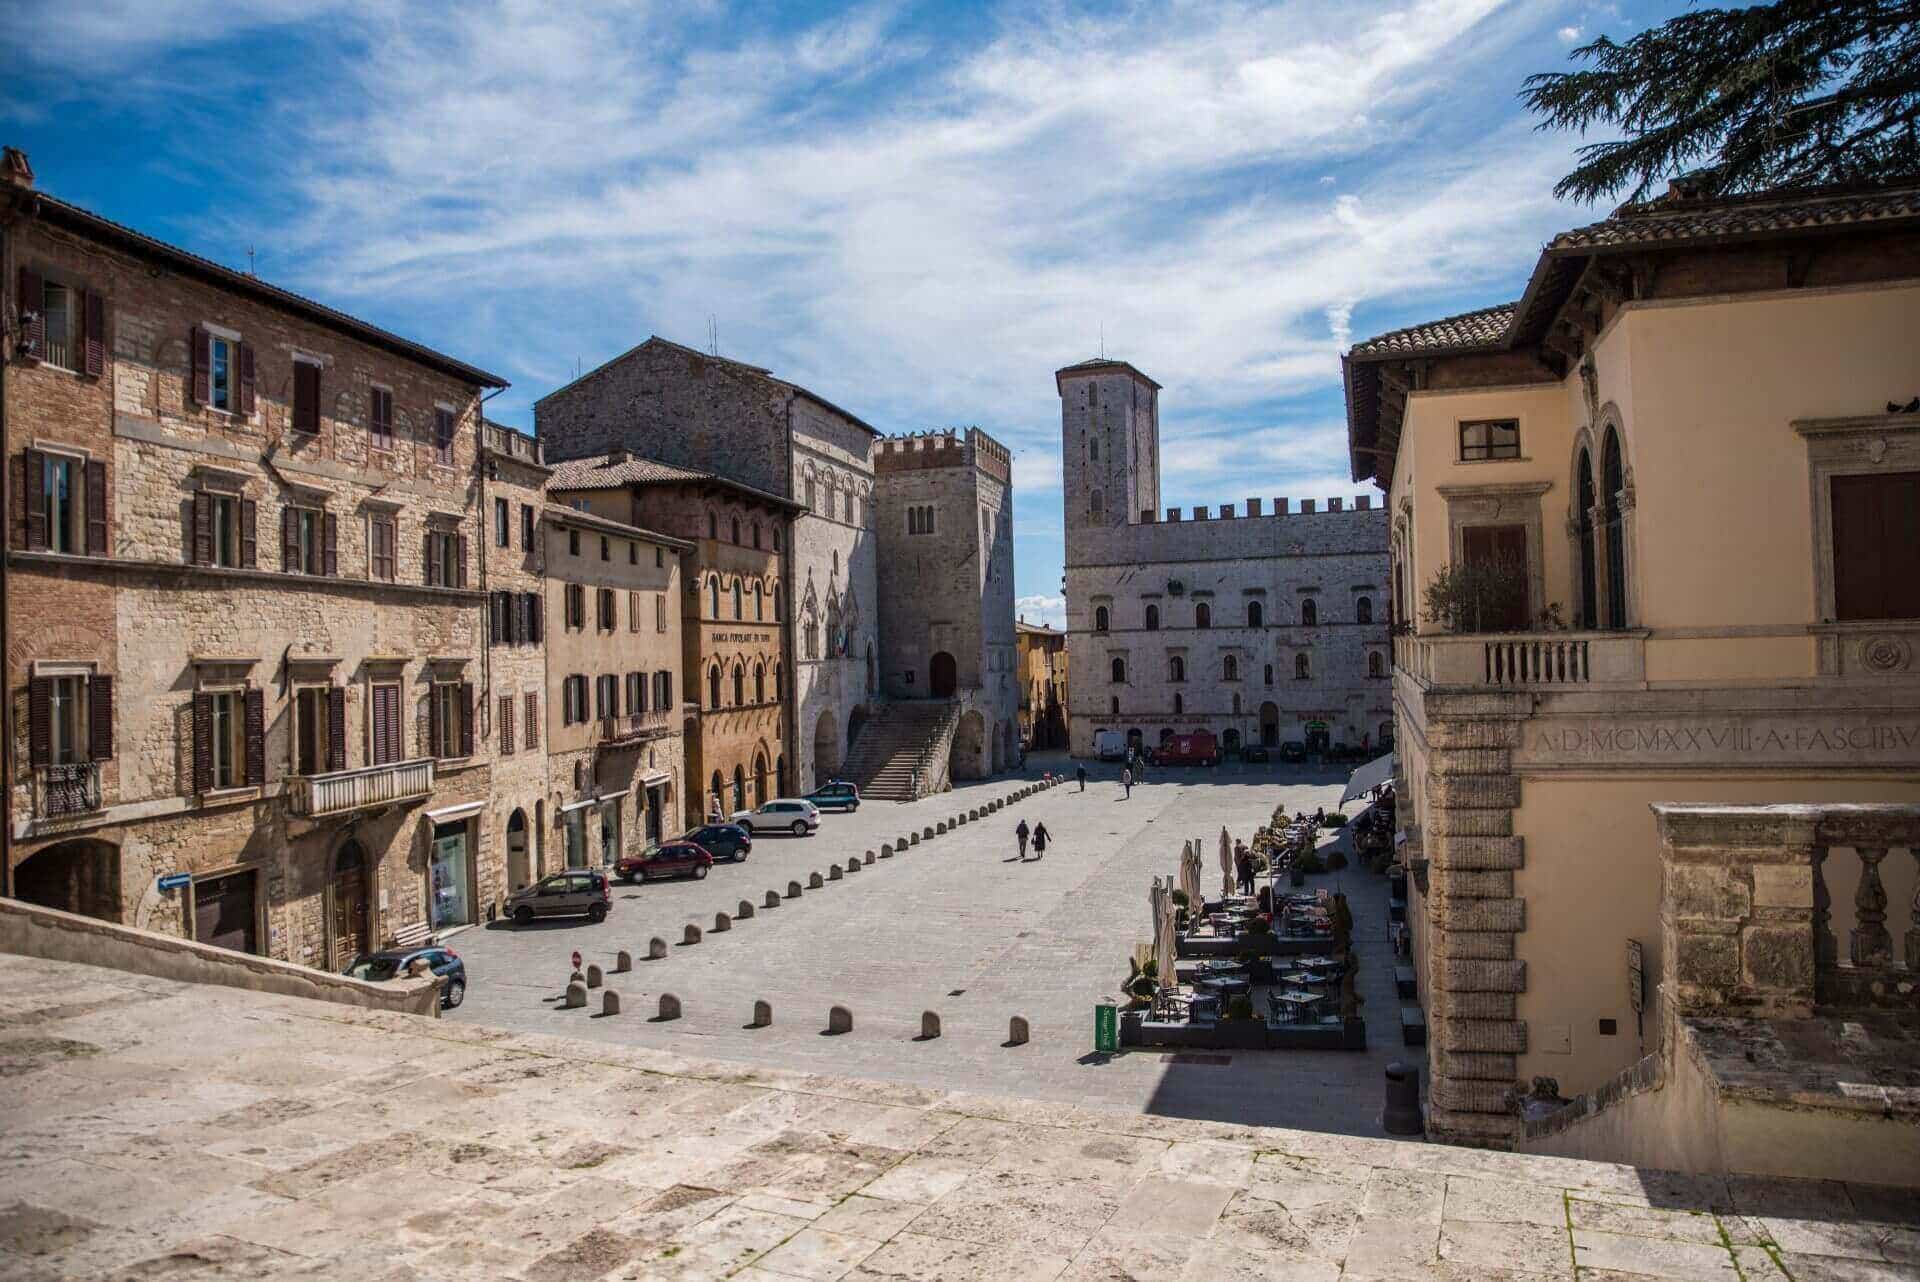 Todi Most Beautiful Places in Umbria